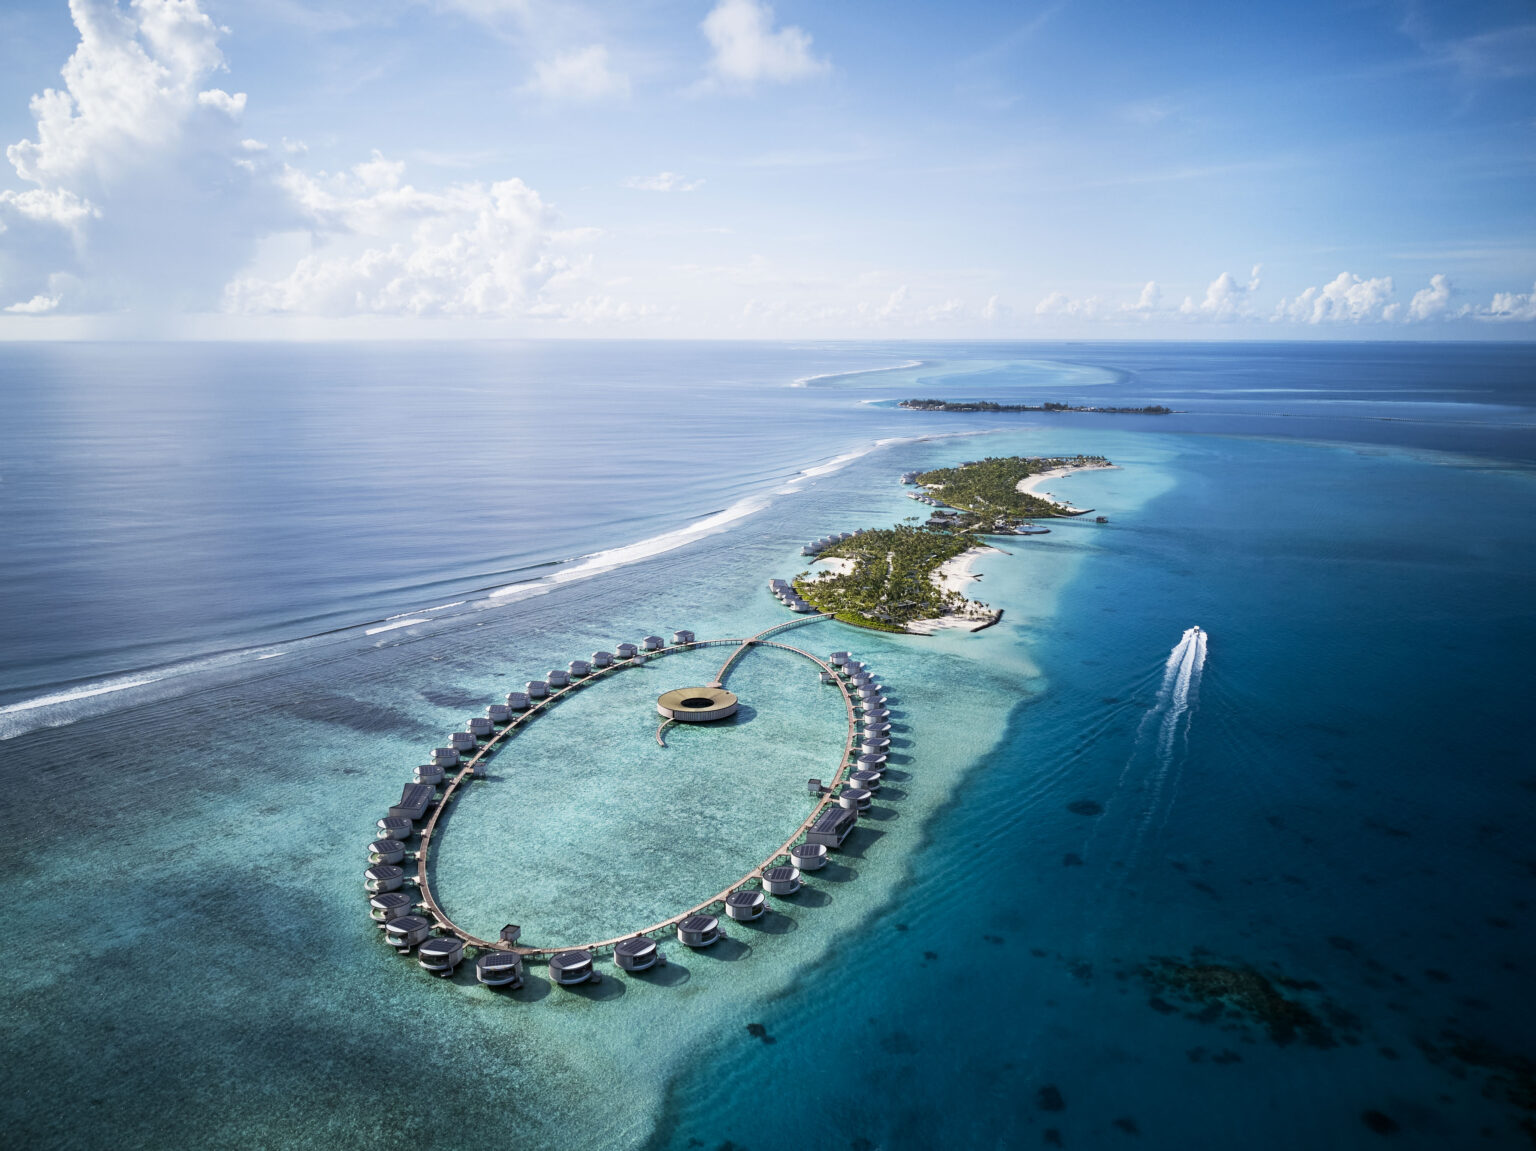 Traumresort: Das The Ritz-Carlton Maldives im Nord-Malé-Atoll